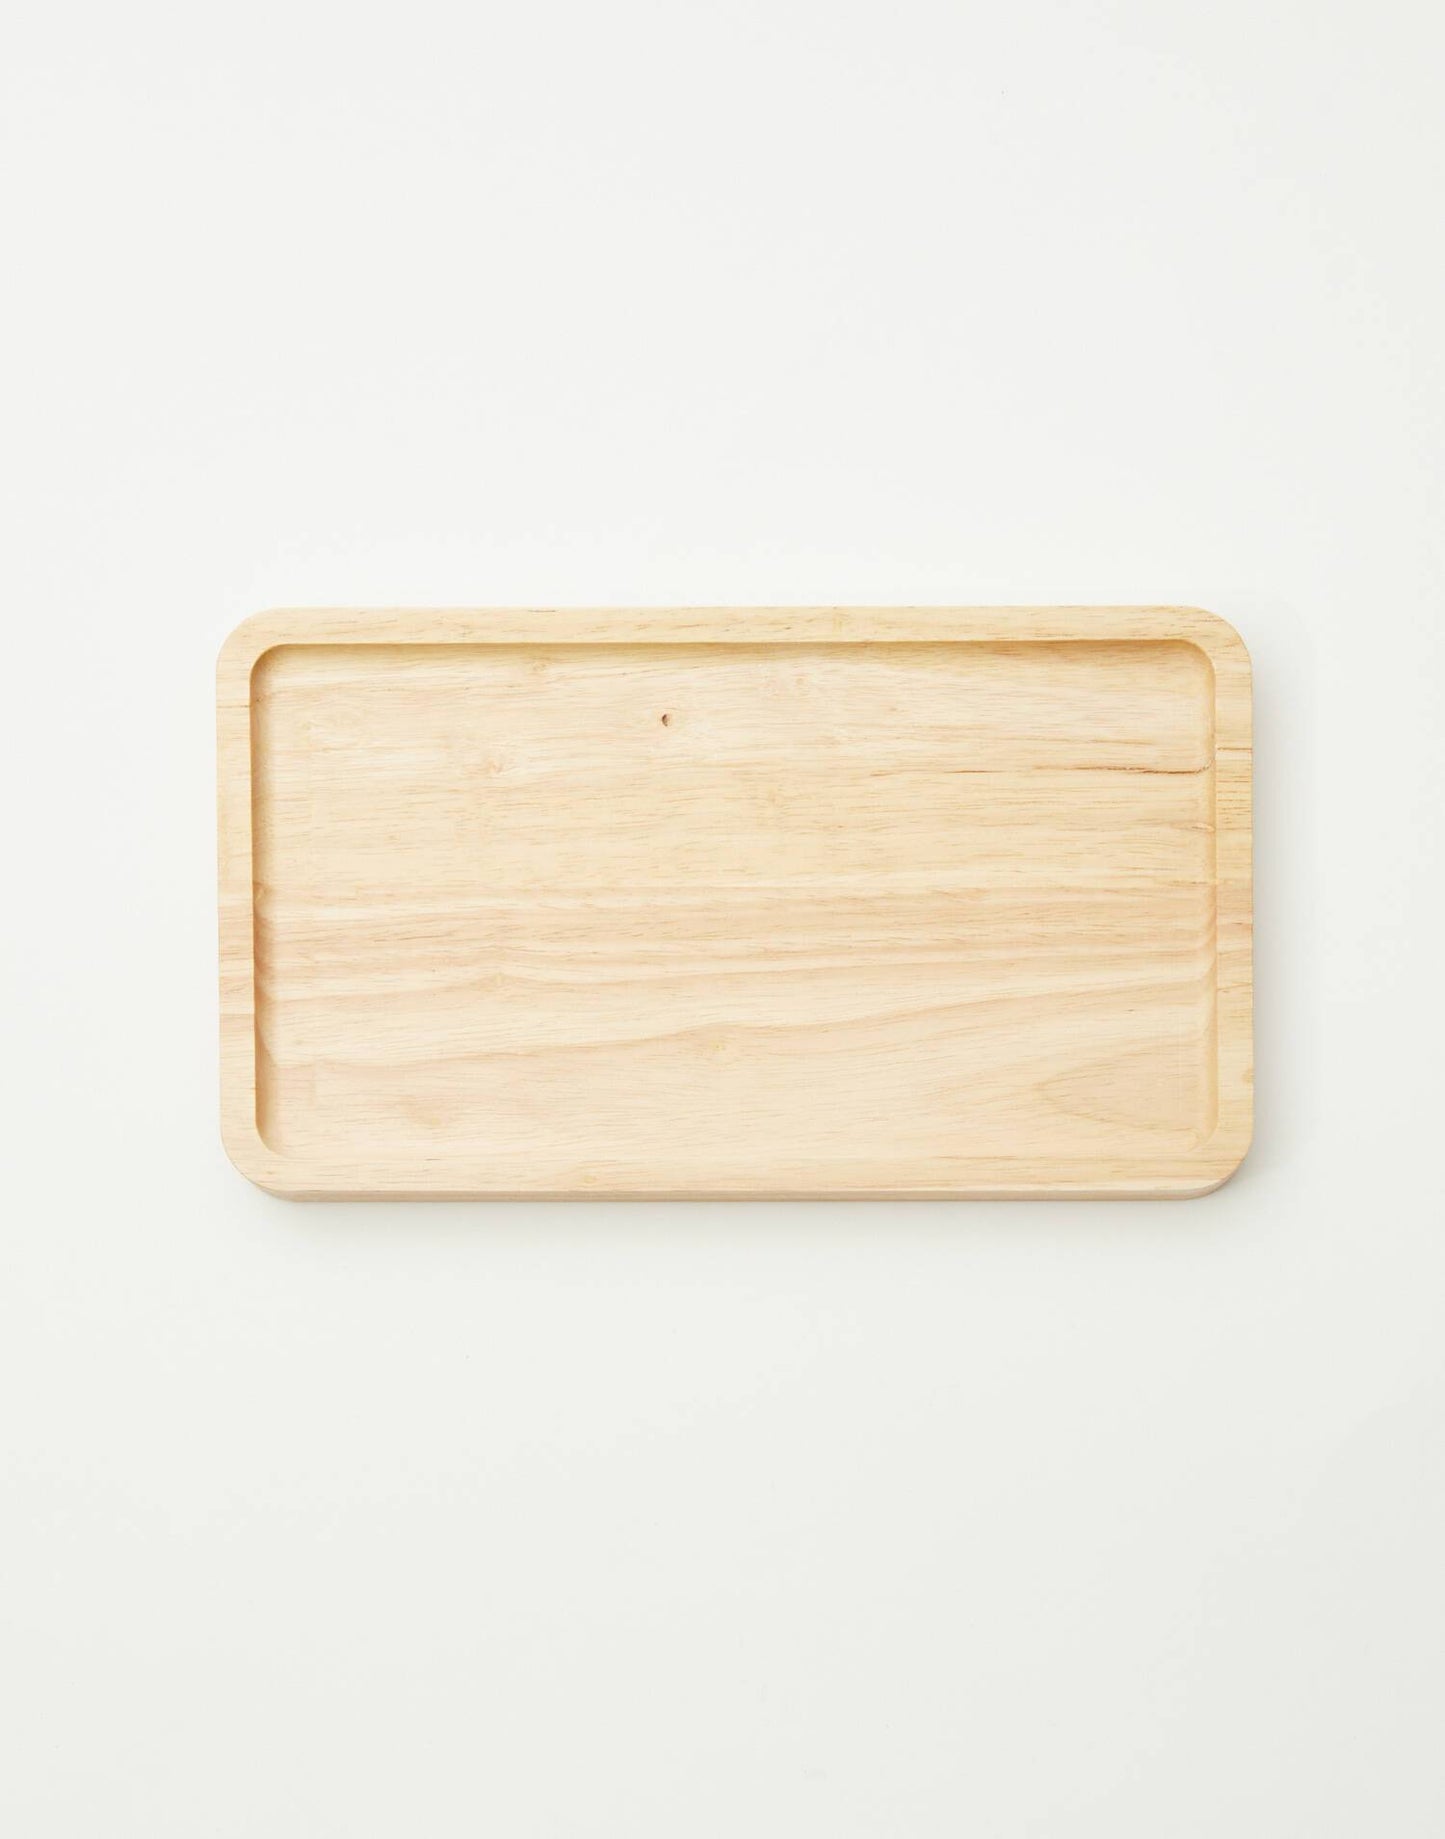 Rectangular wood tray